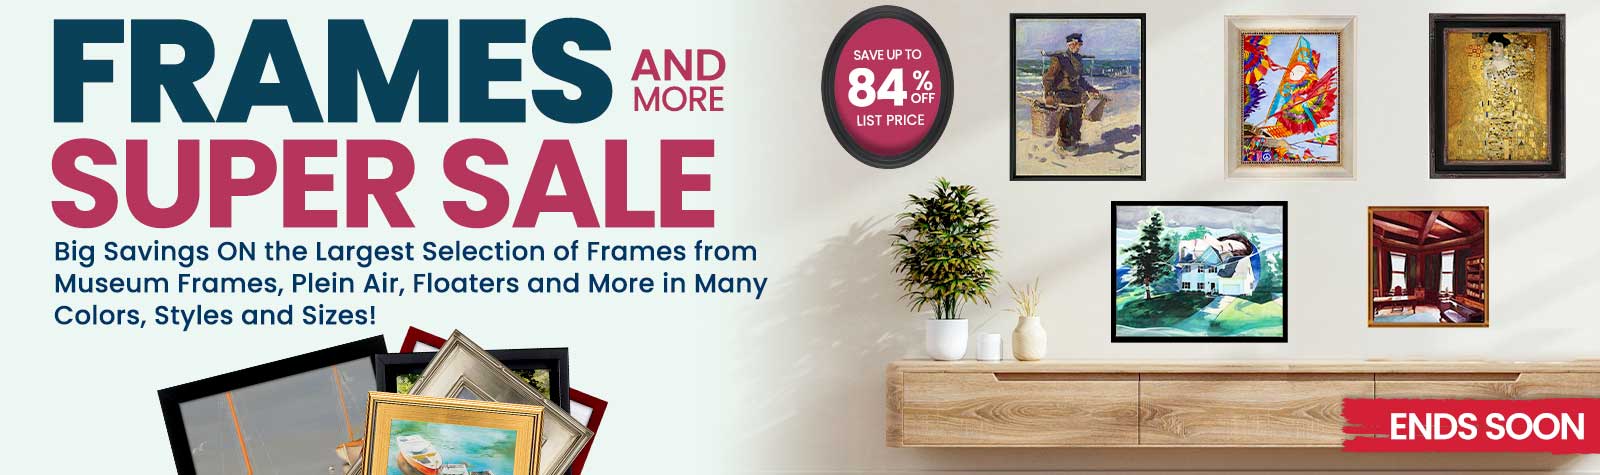 Frames and More Super Sale